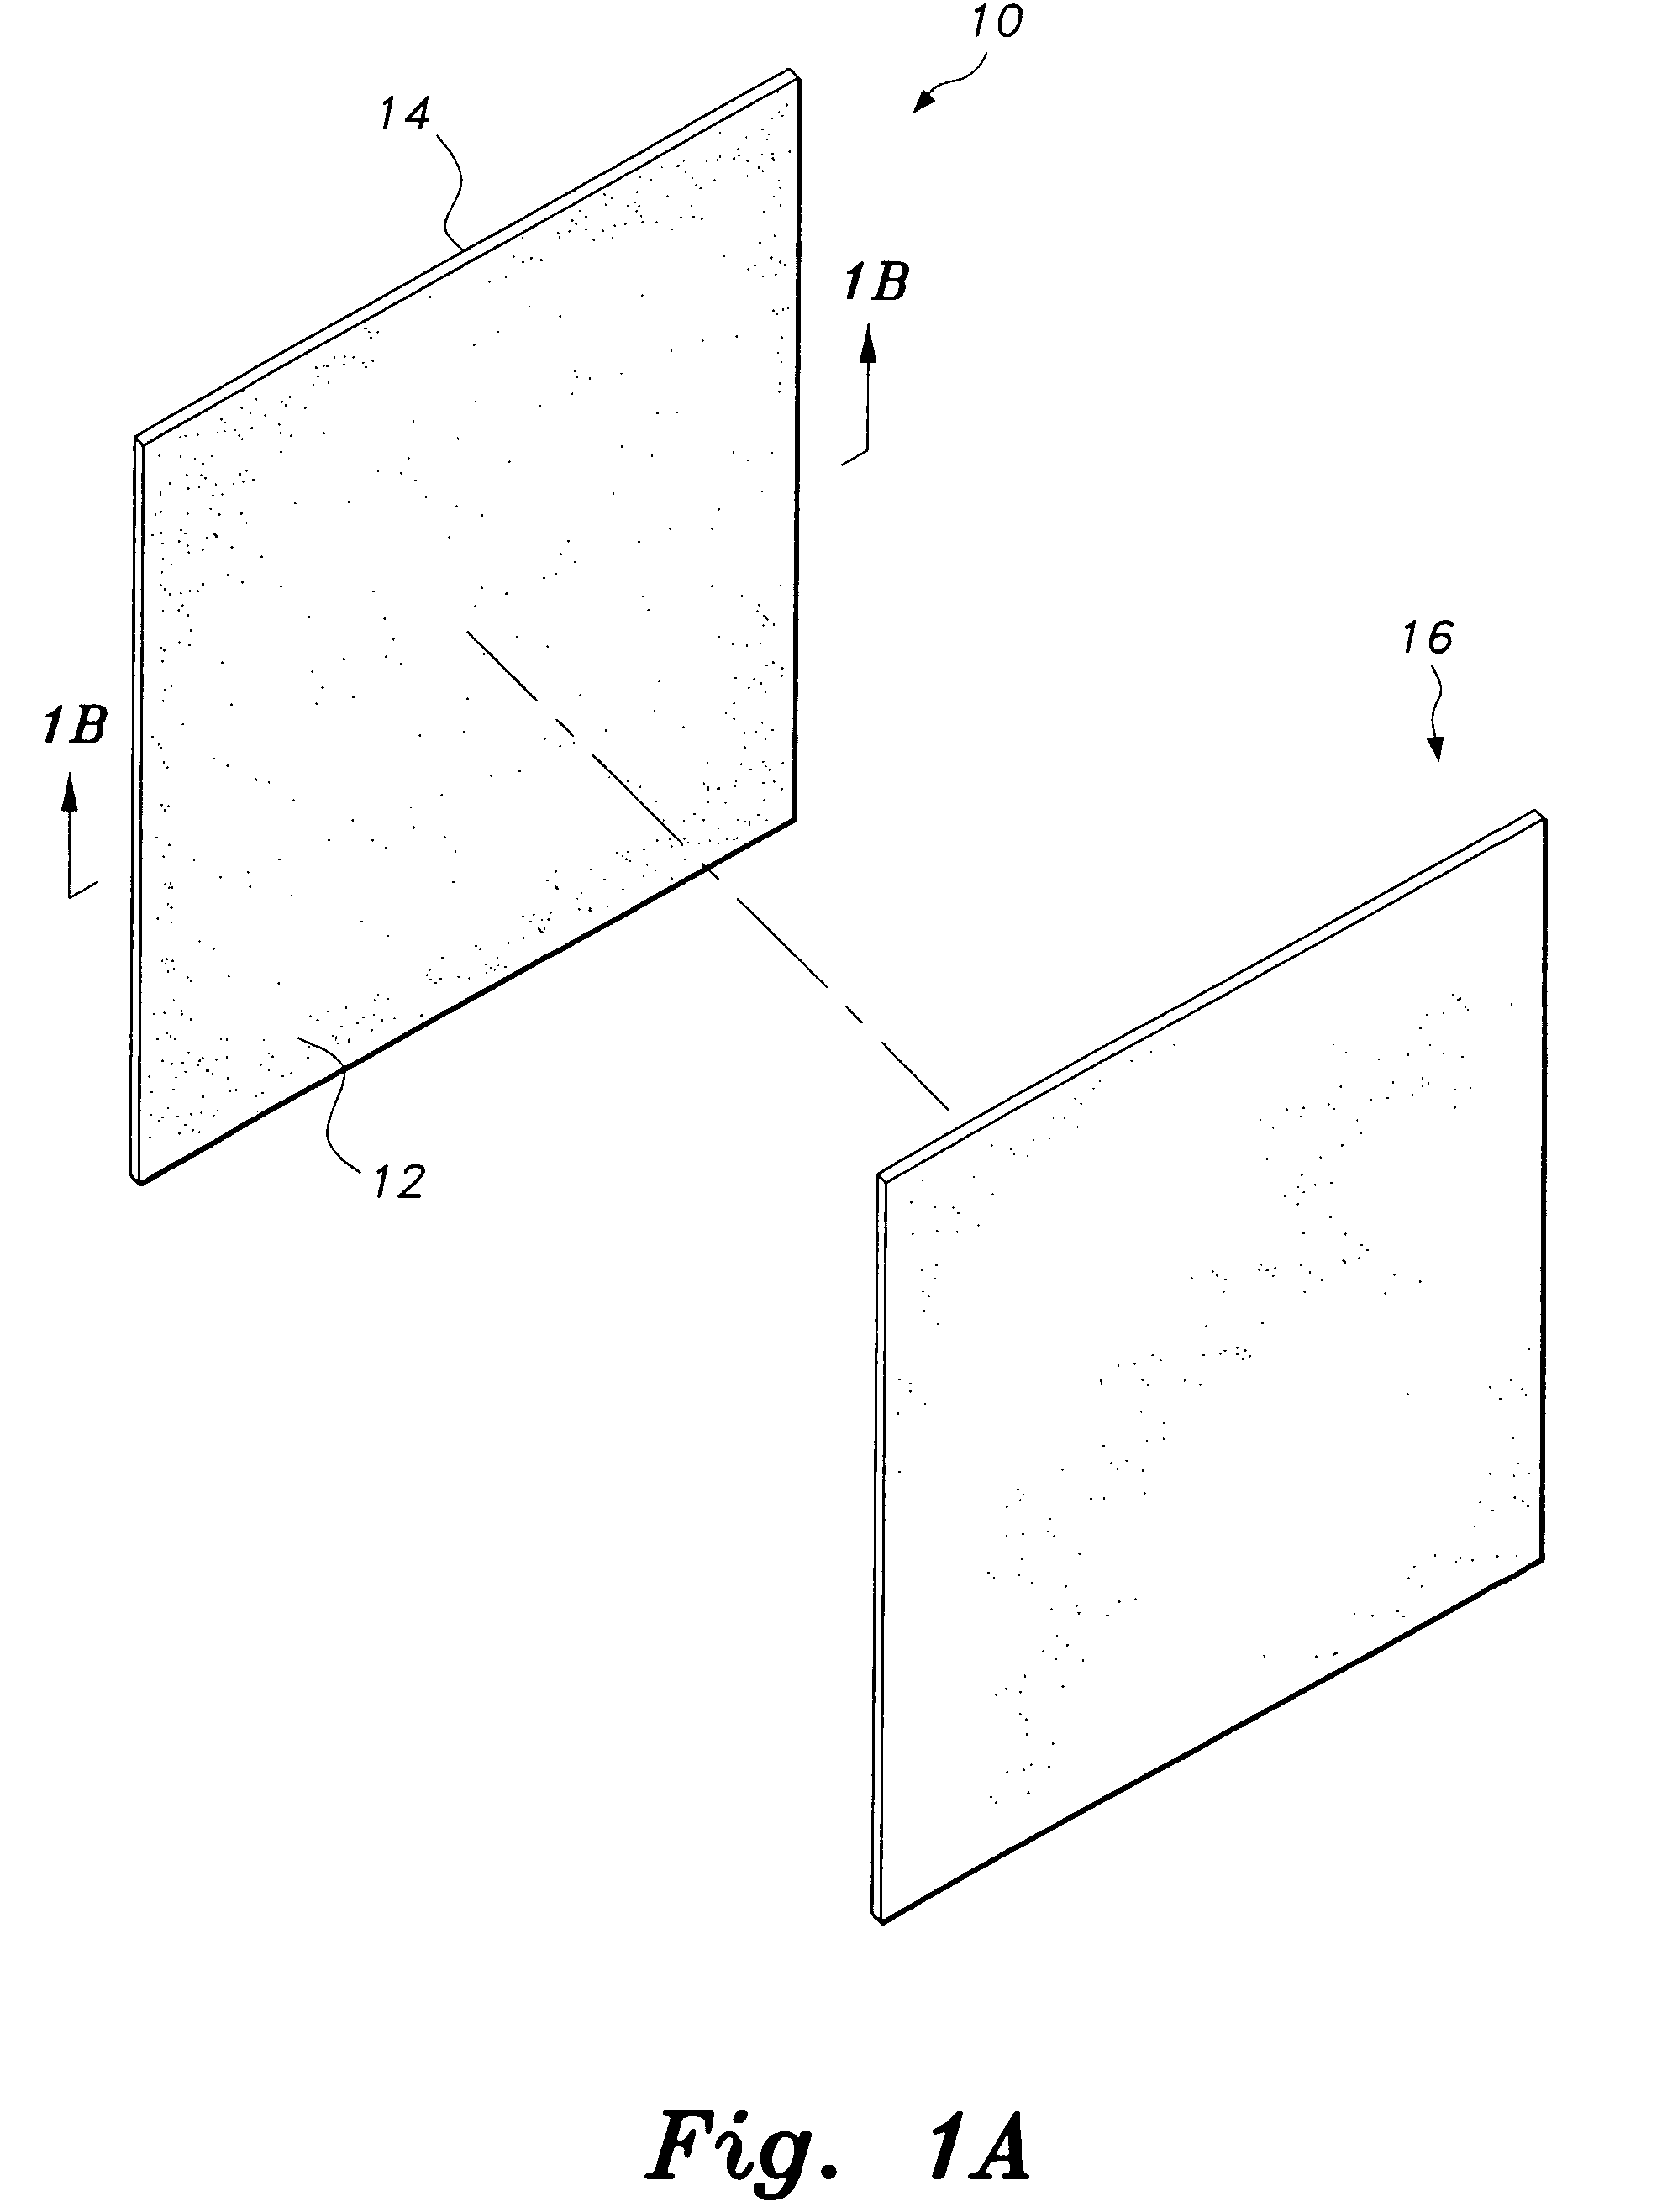 Marking sheet for cutting drywall